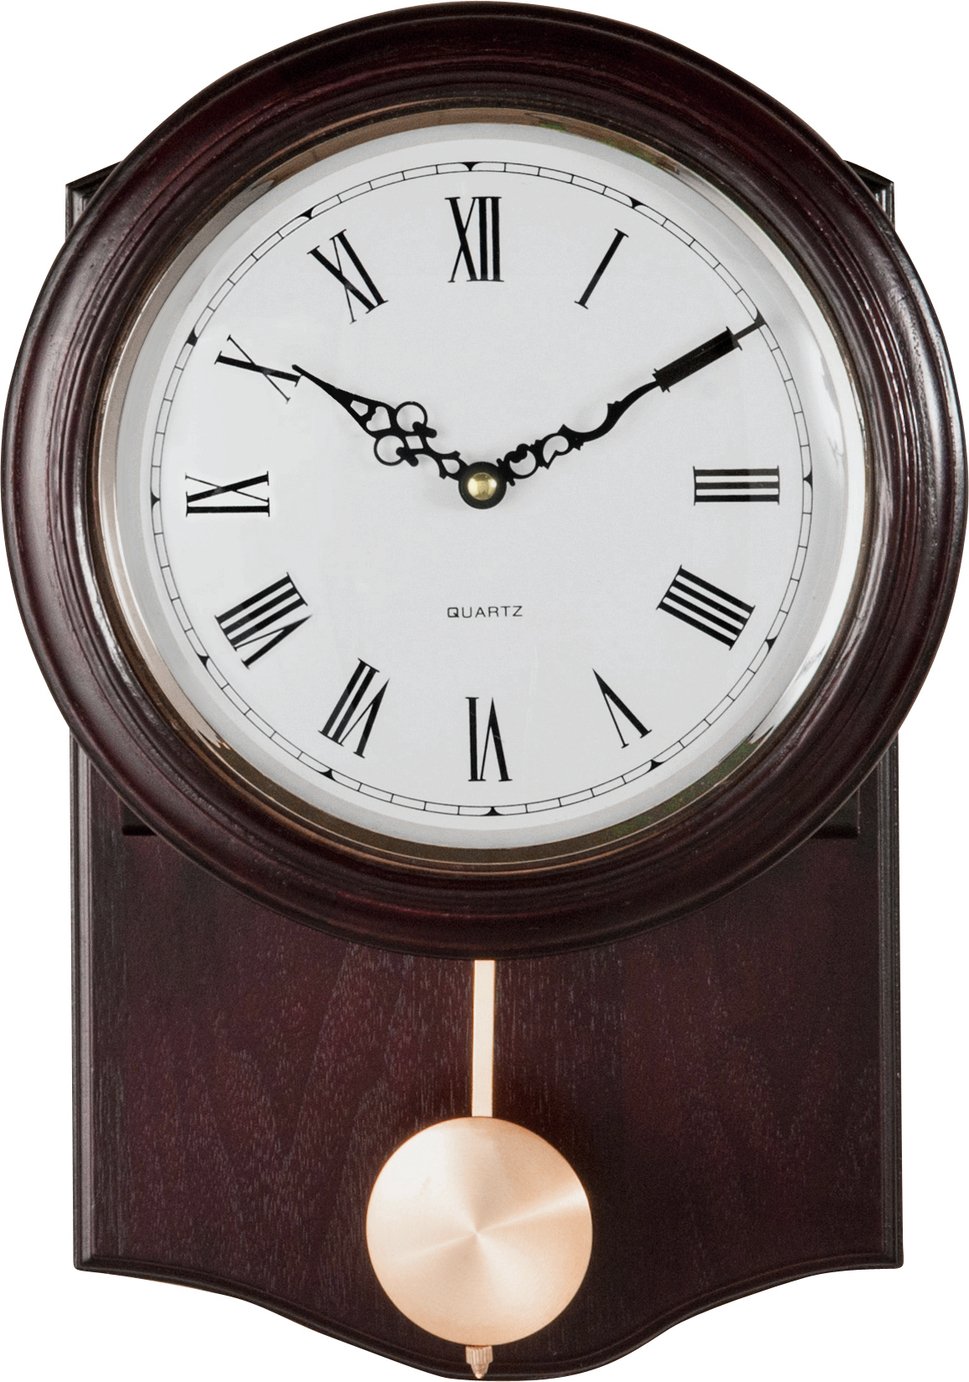 Argos Home Pendulum Wall Clock review